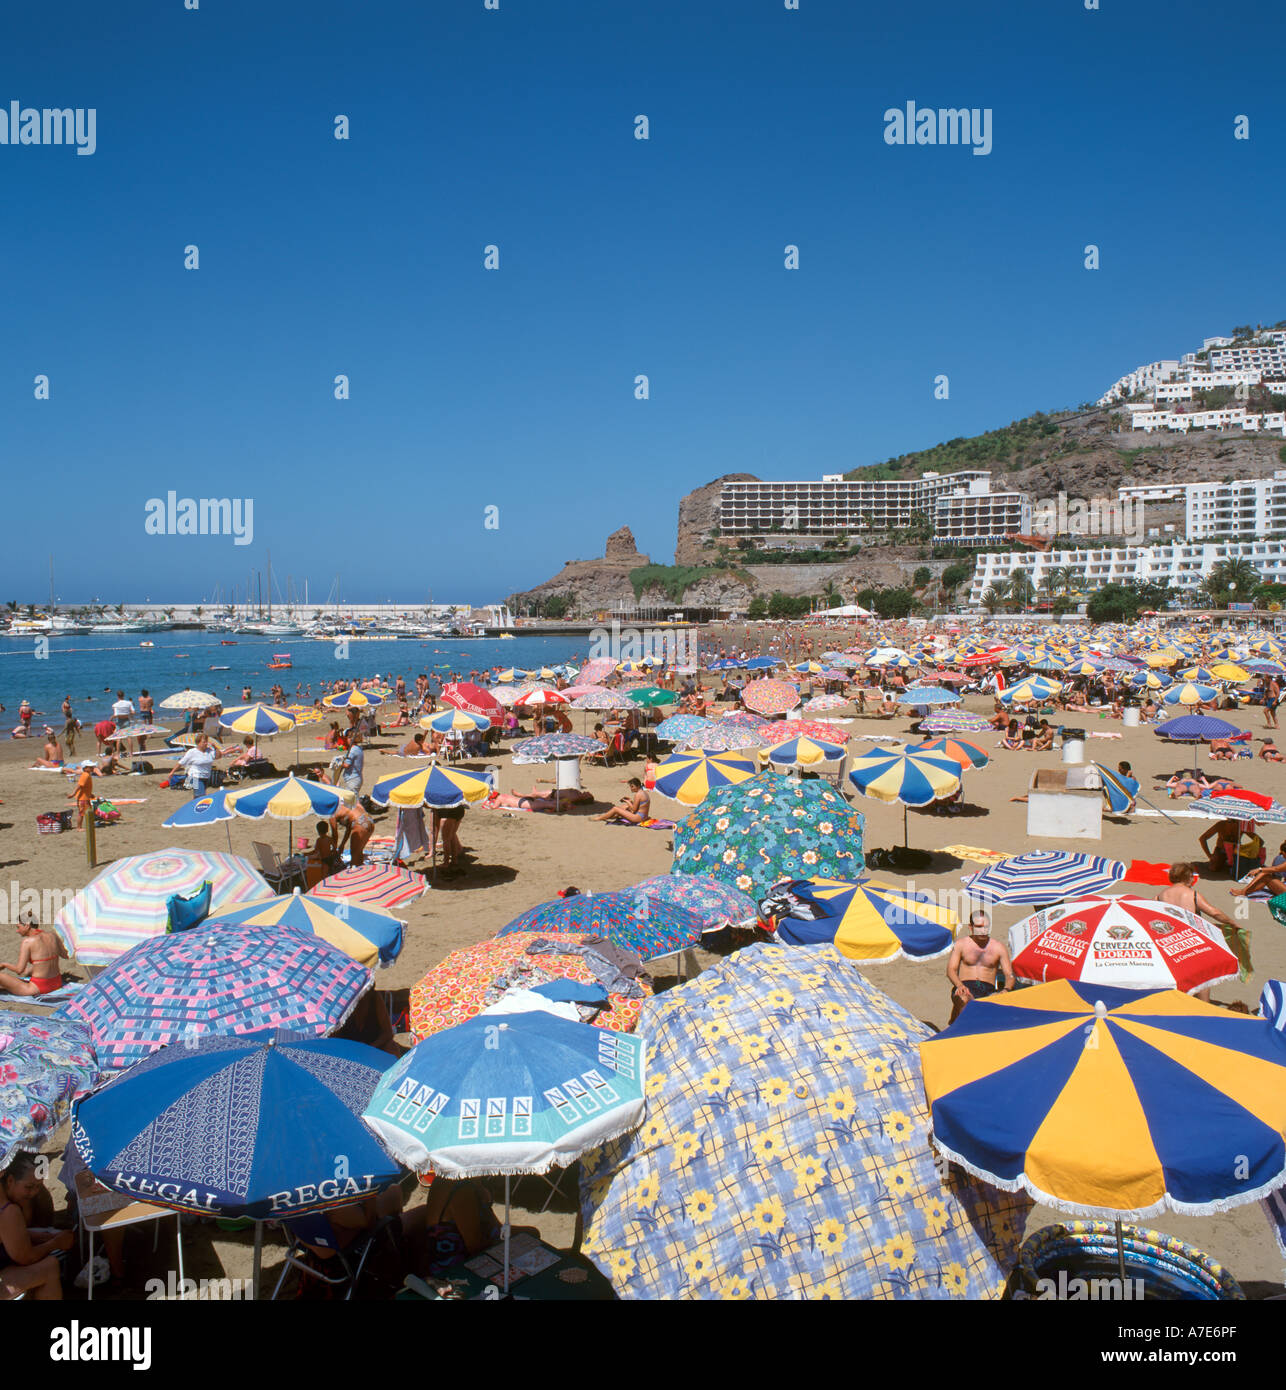 Main Beach, Puerto Rico, Gran Canaria, Îles Canaries, Espagne prises en 1996 Banque D'Images